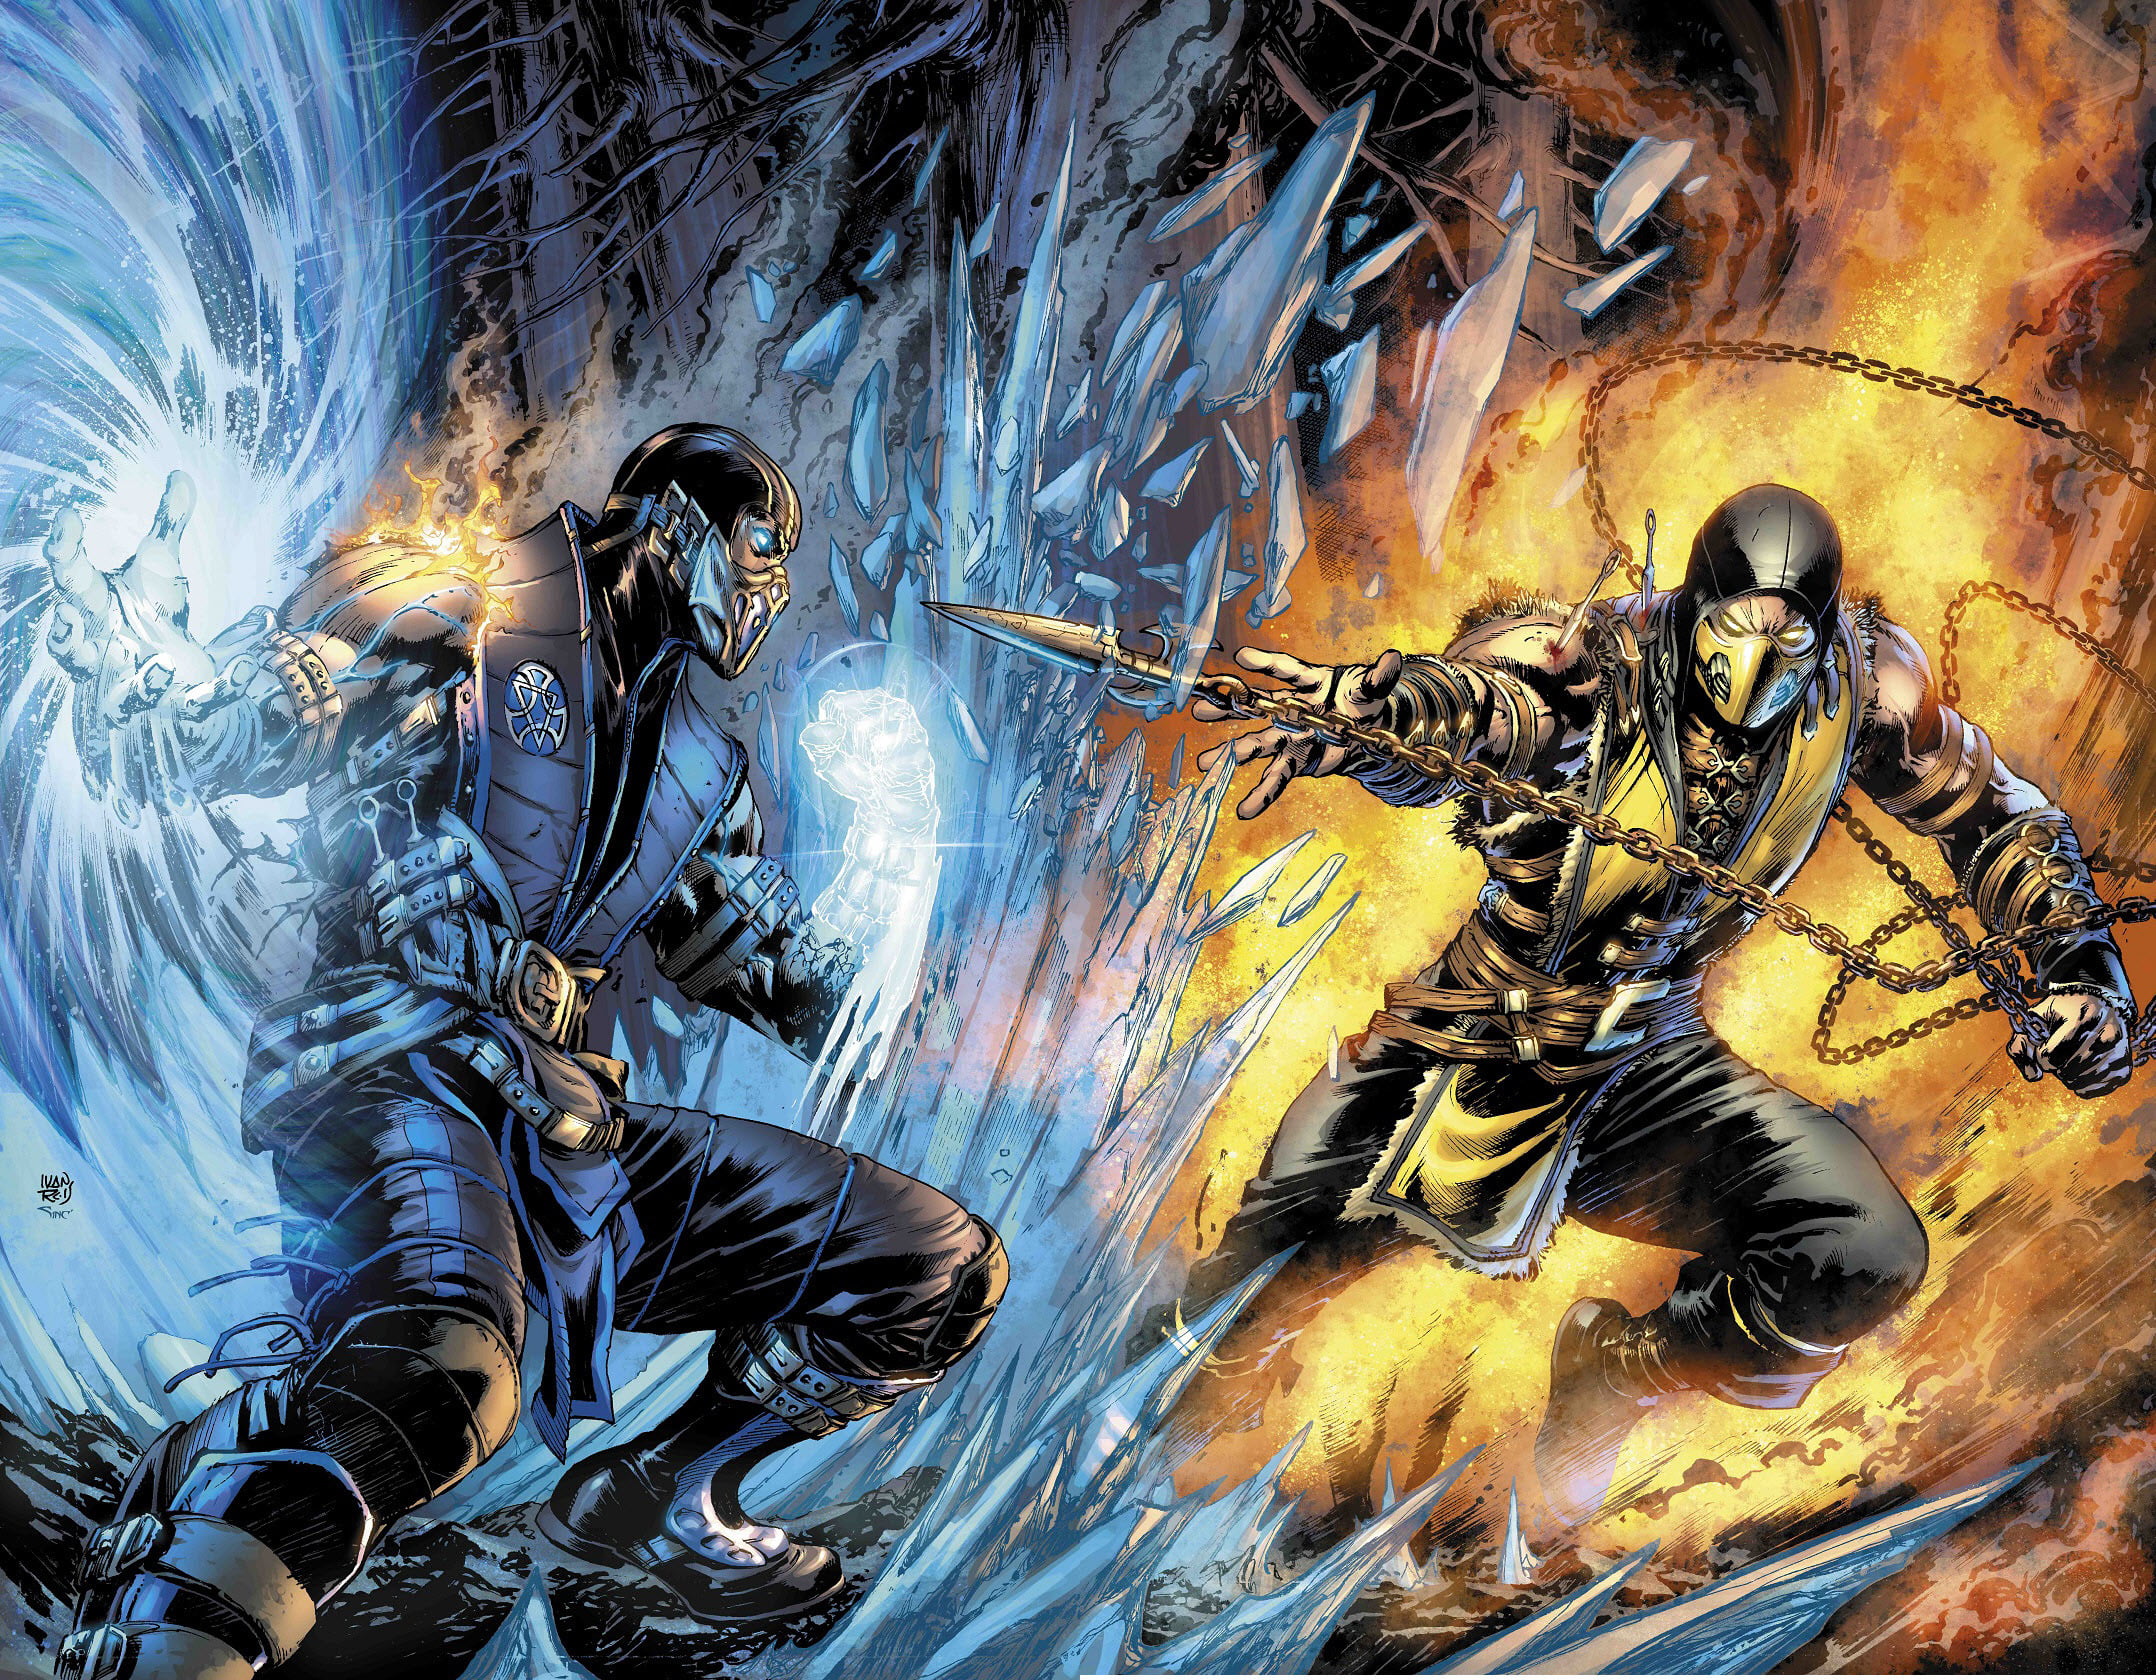 Mortal Combat Sub-Zero vs Scorpion wallpaper, art, Mortal Kombat X